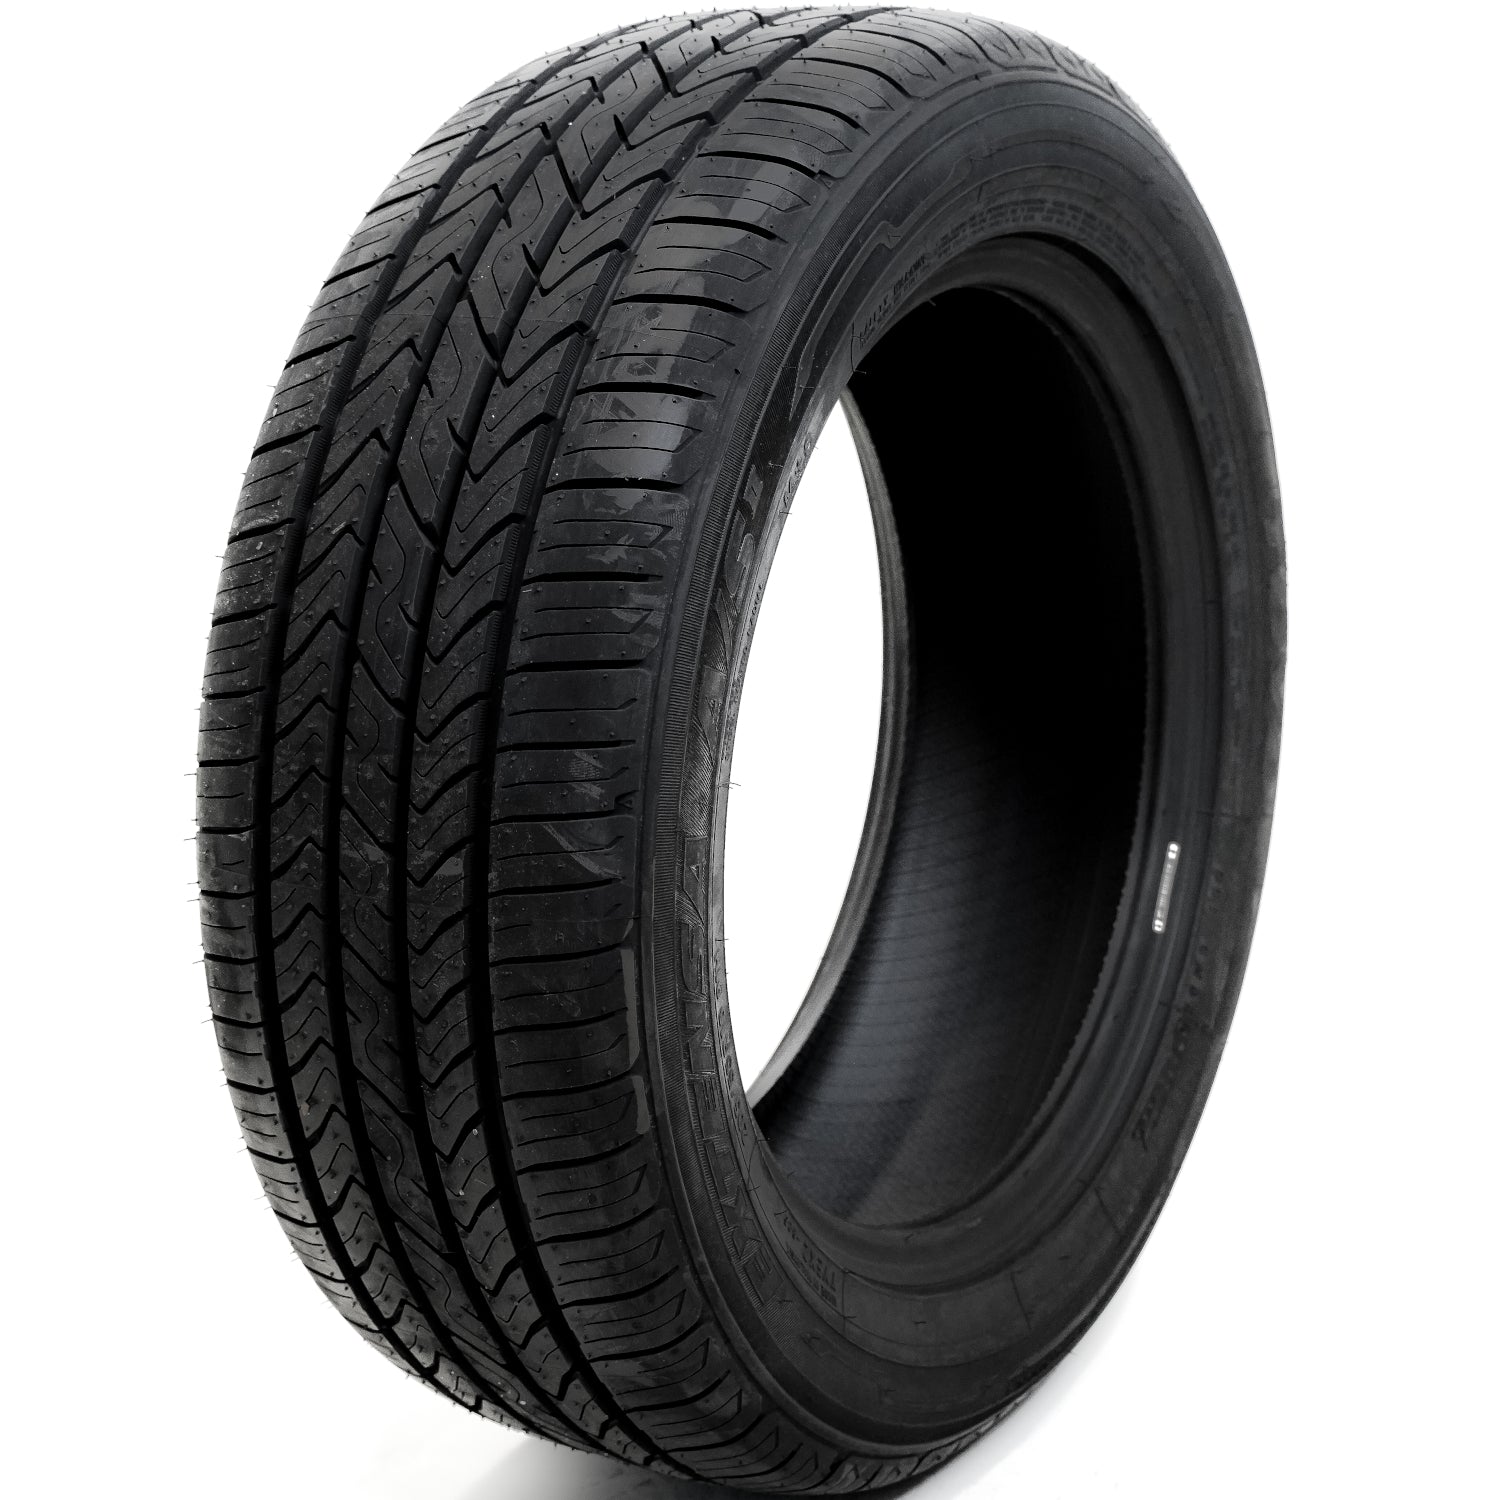 TOYO TIRES EXTENSA A/S II 195/55R16 (24.4X7.7R 16) Tires